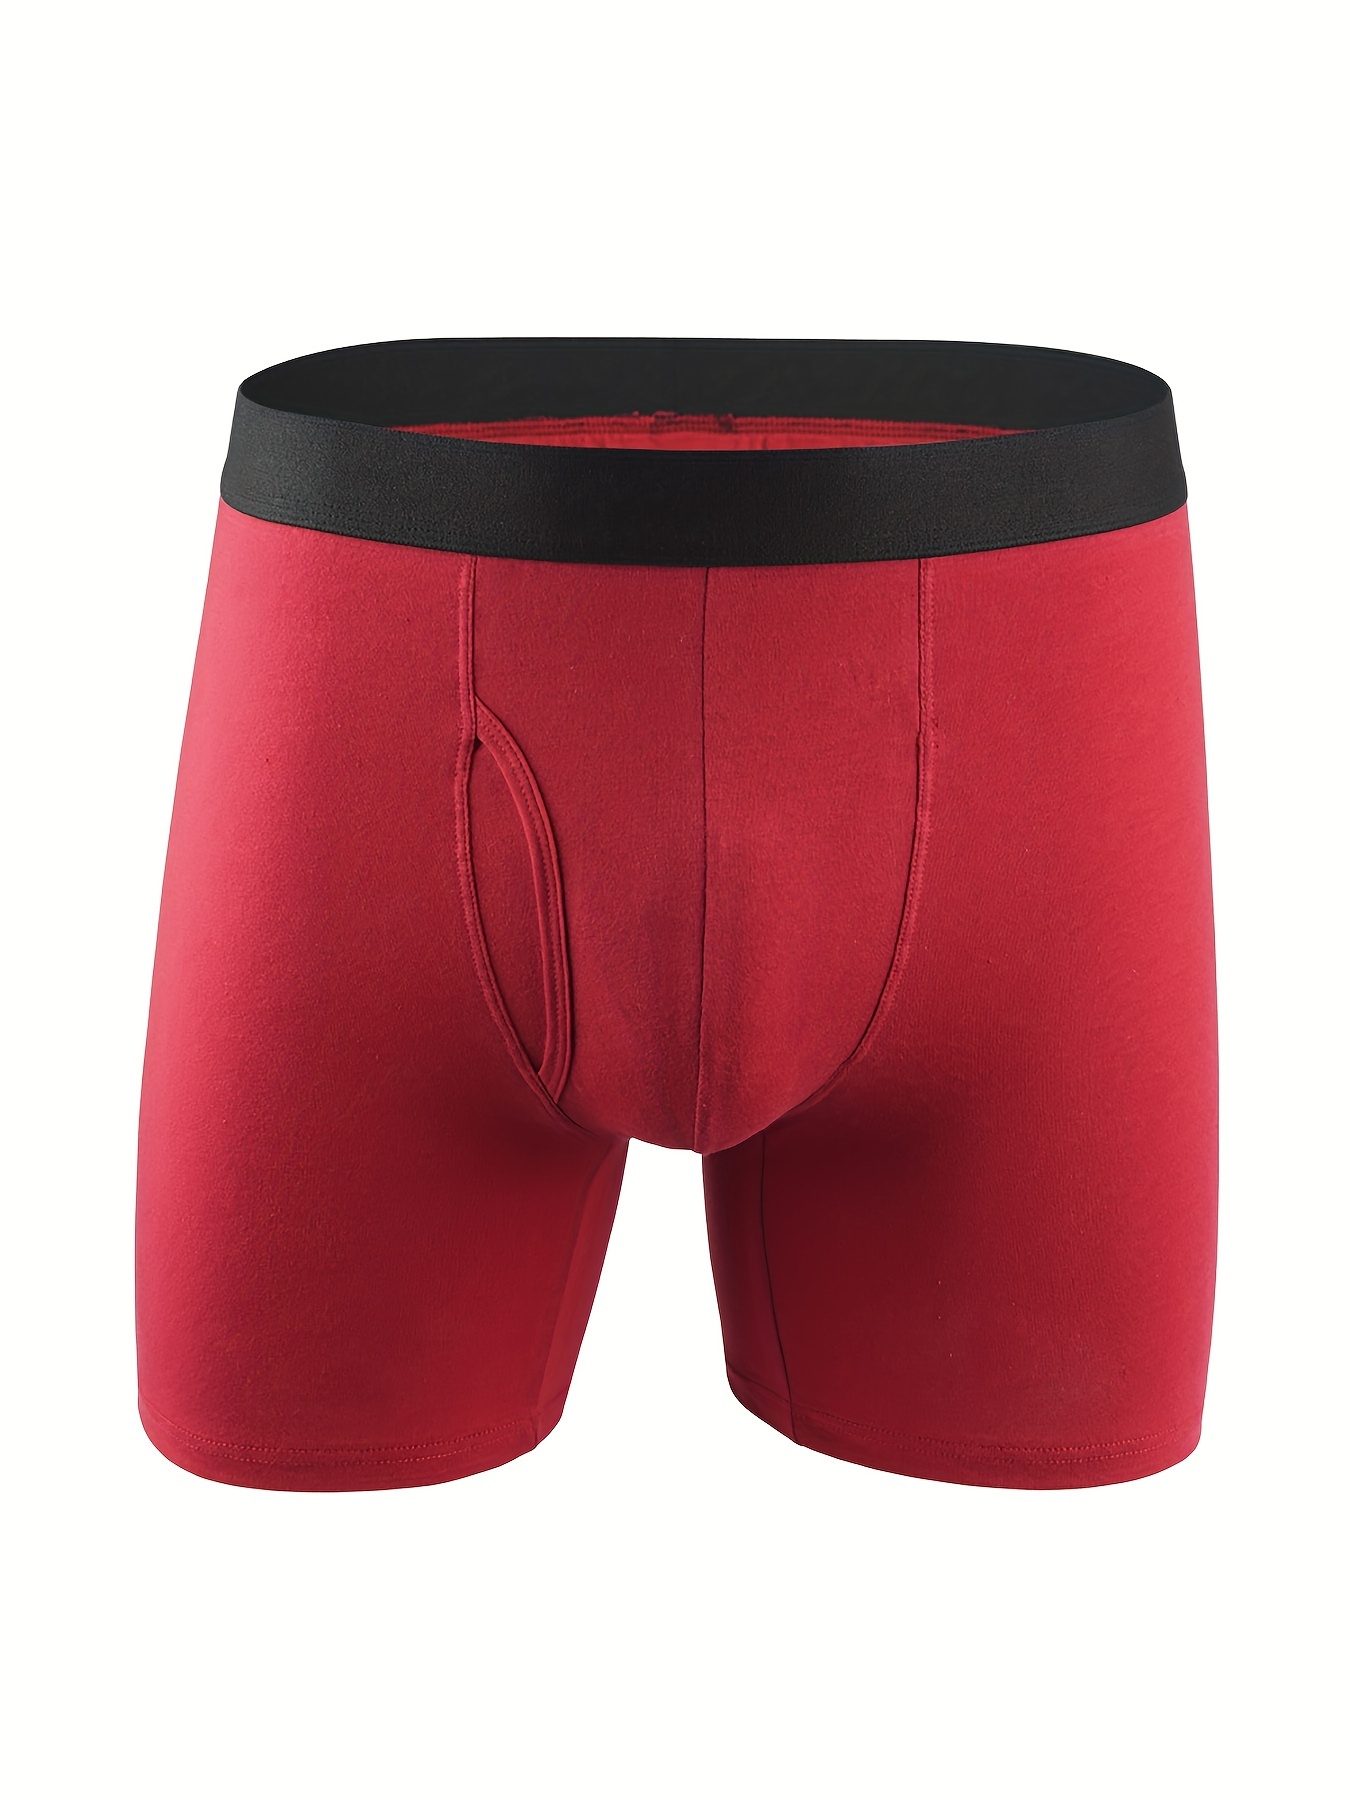 Men's Breathable Antibacterial Sports Underwear Comfortable